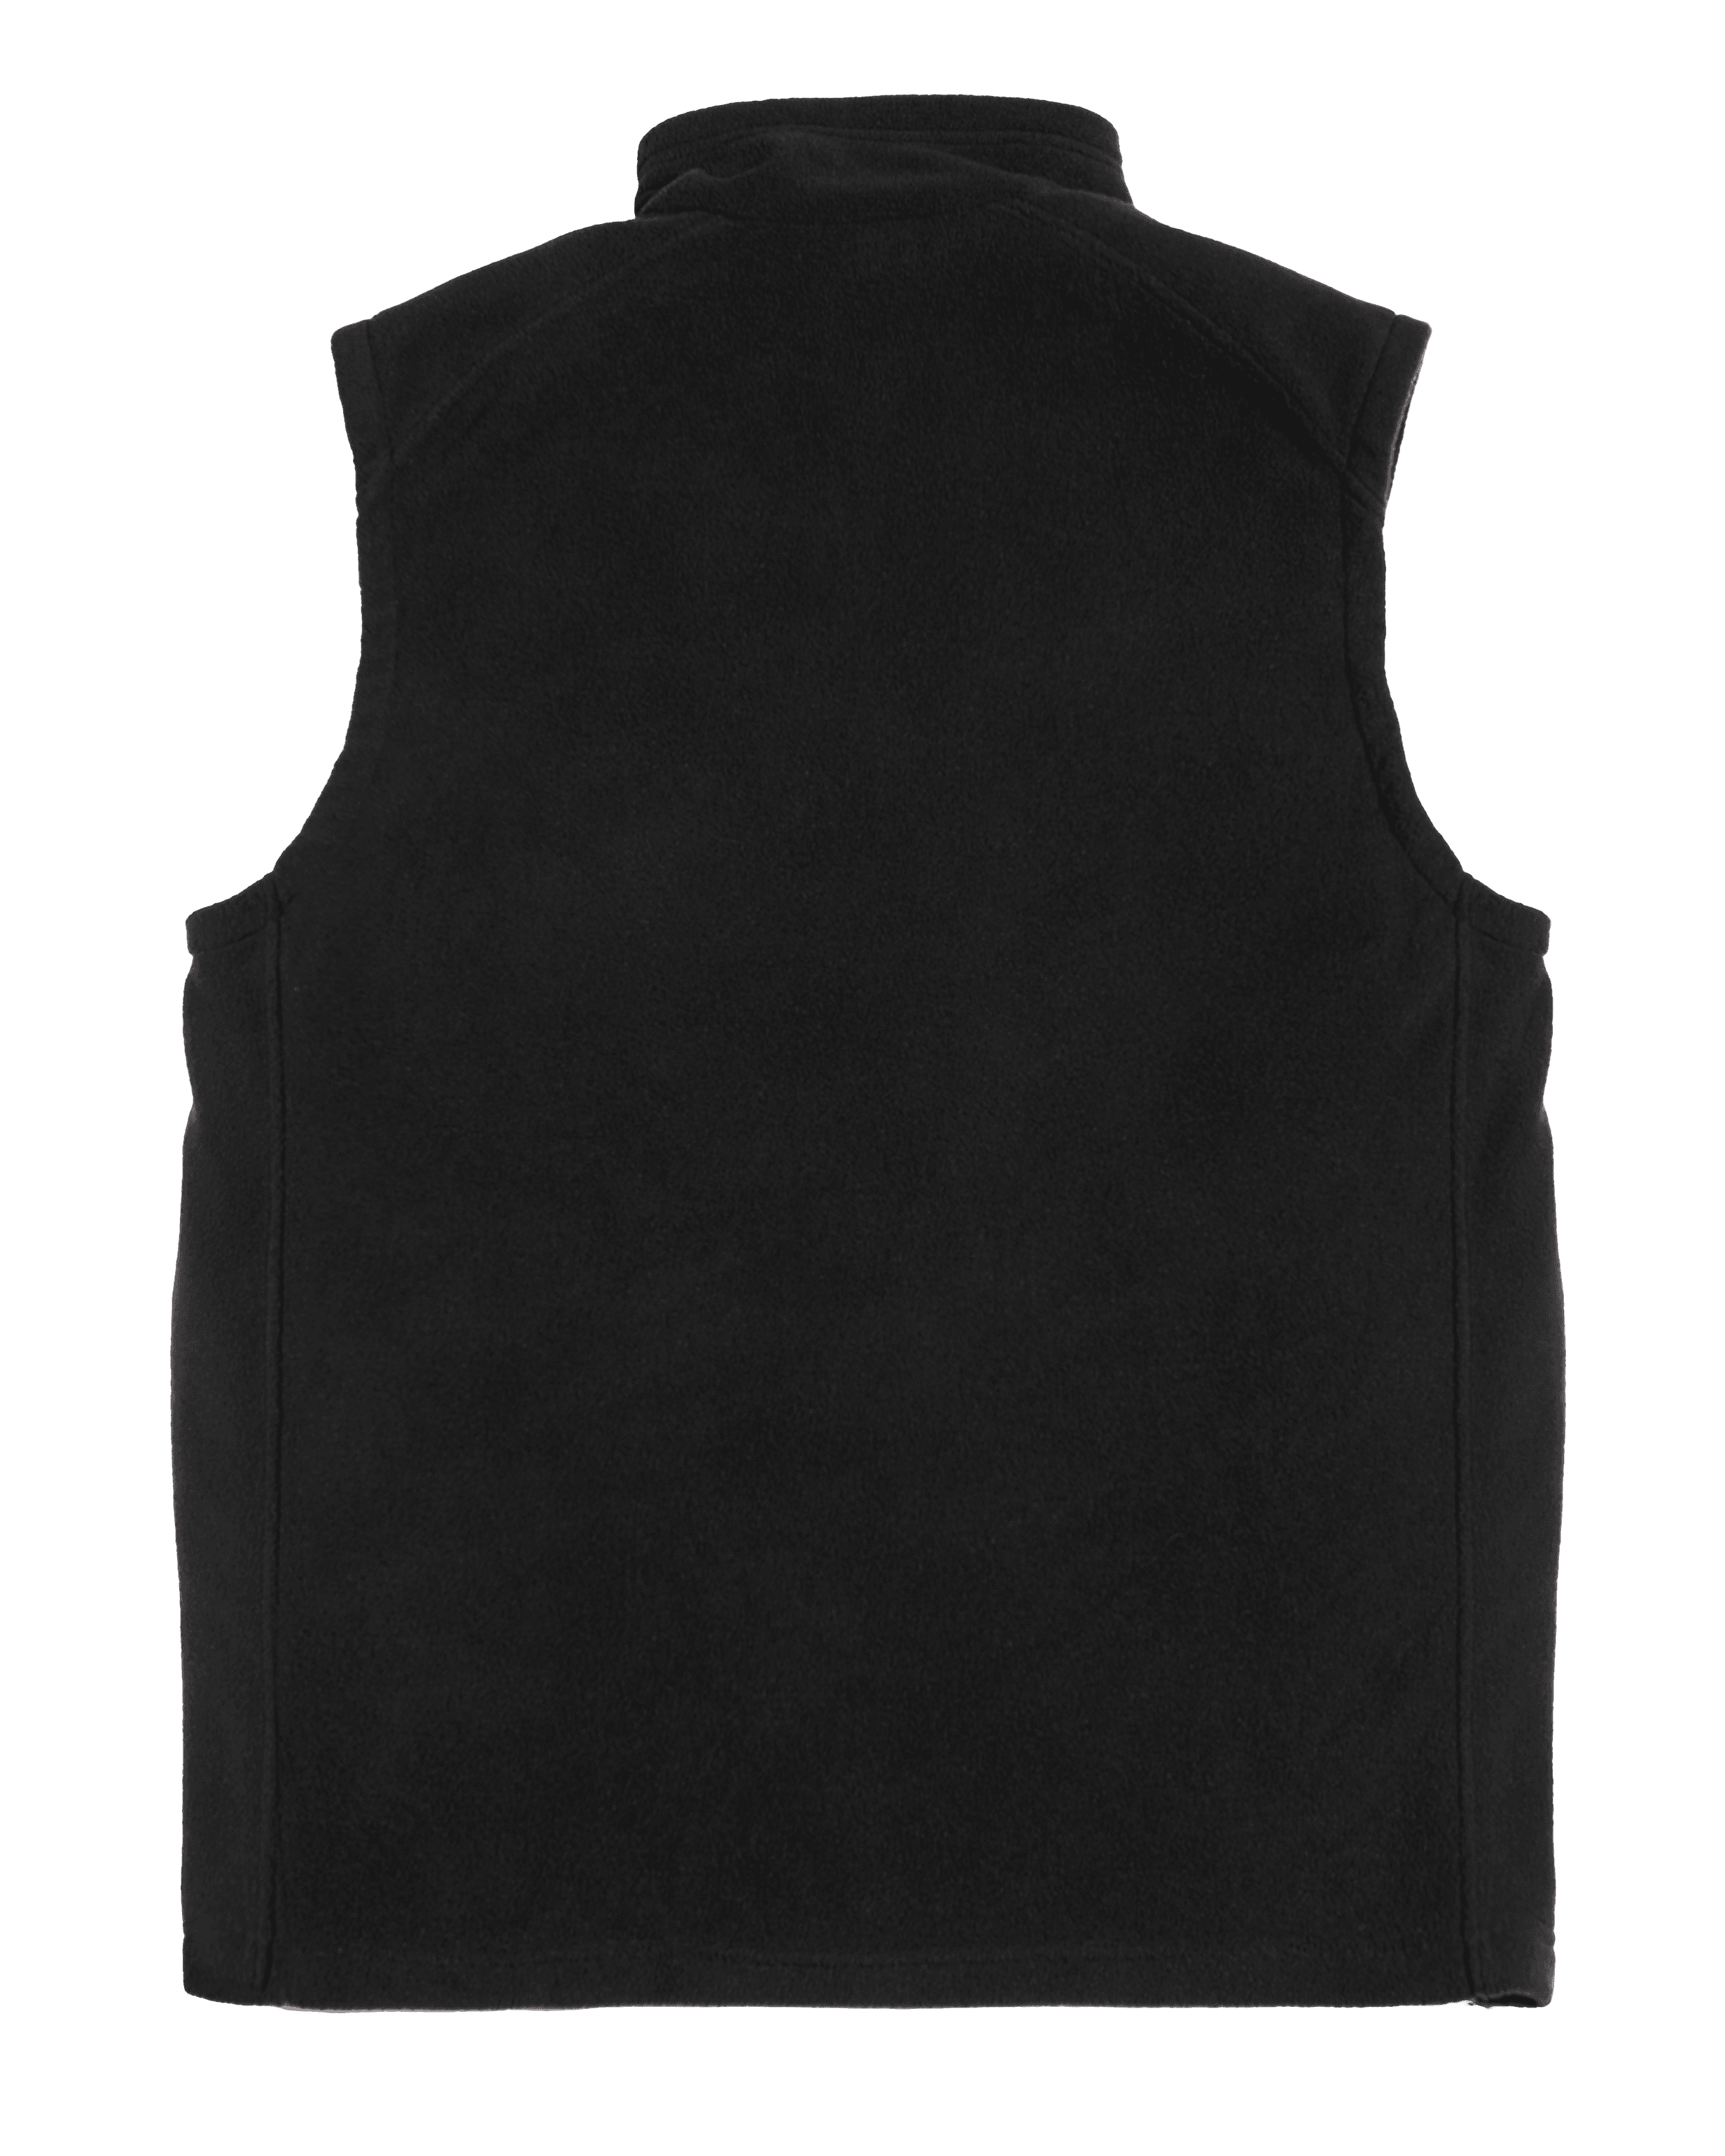 METRO Heated Vest for Men